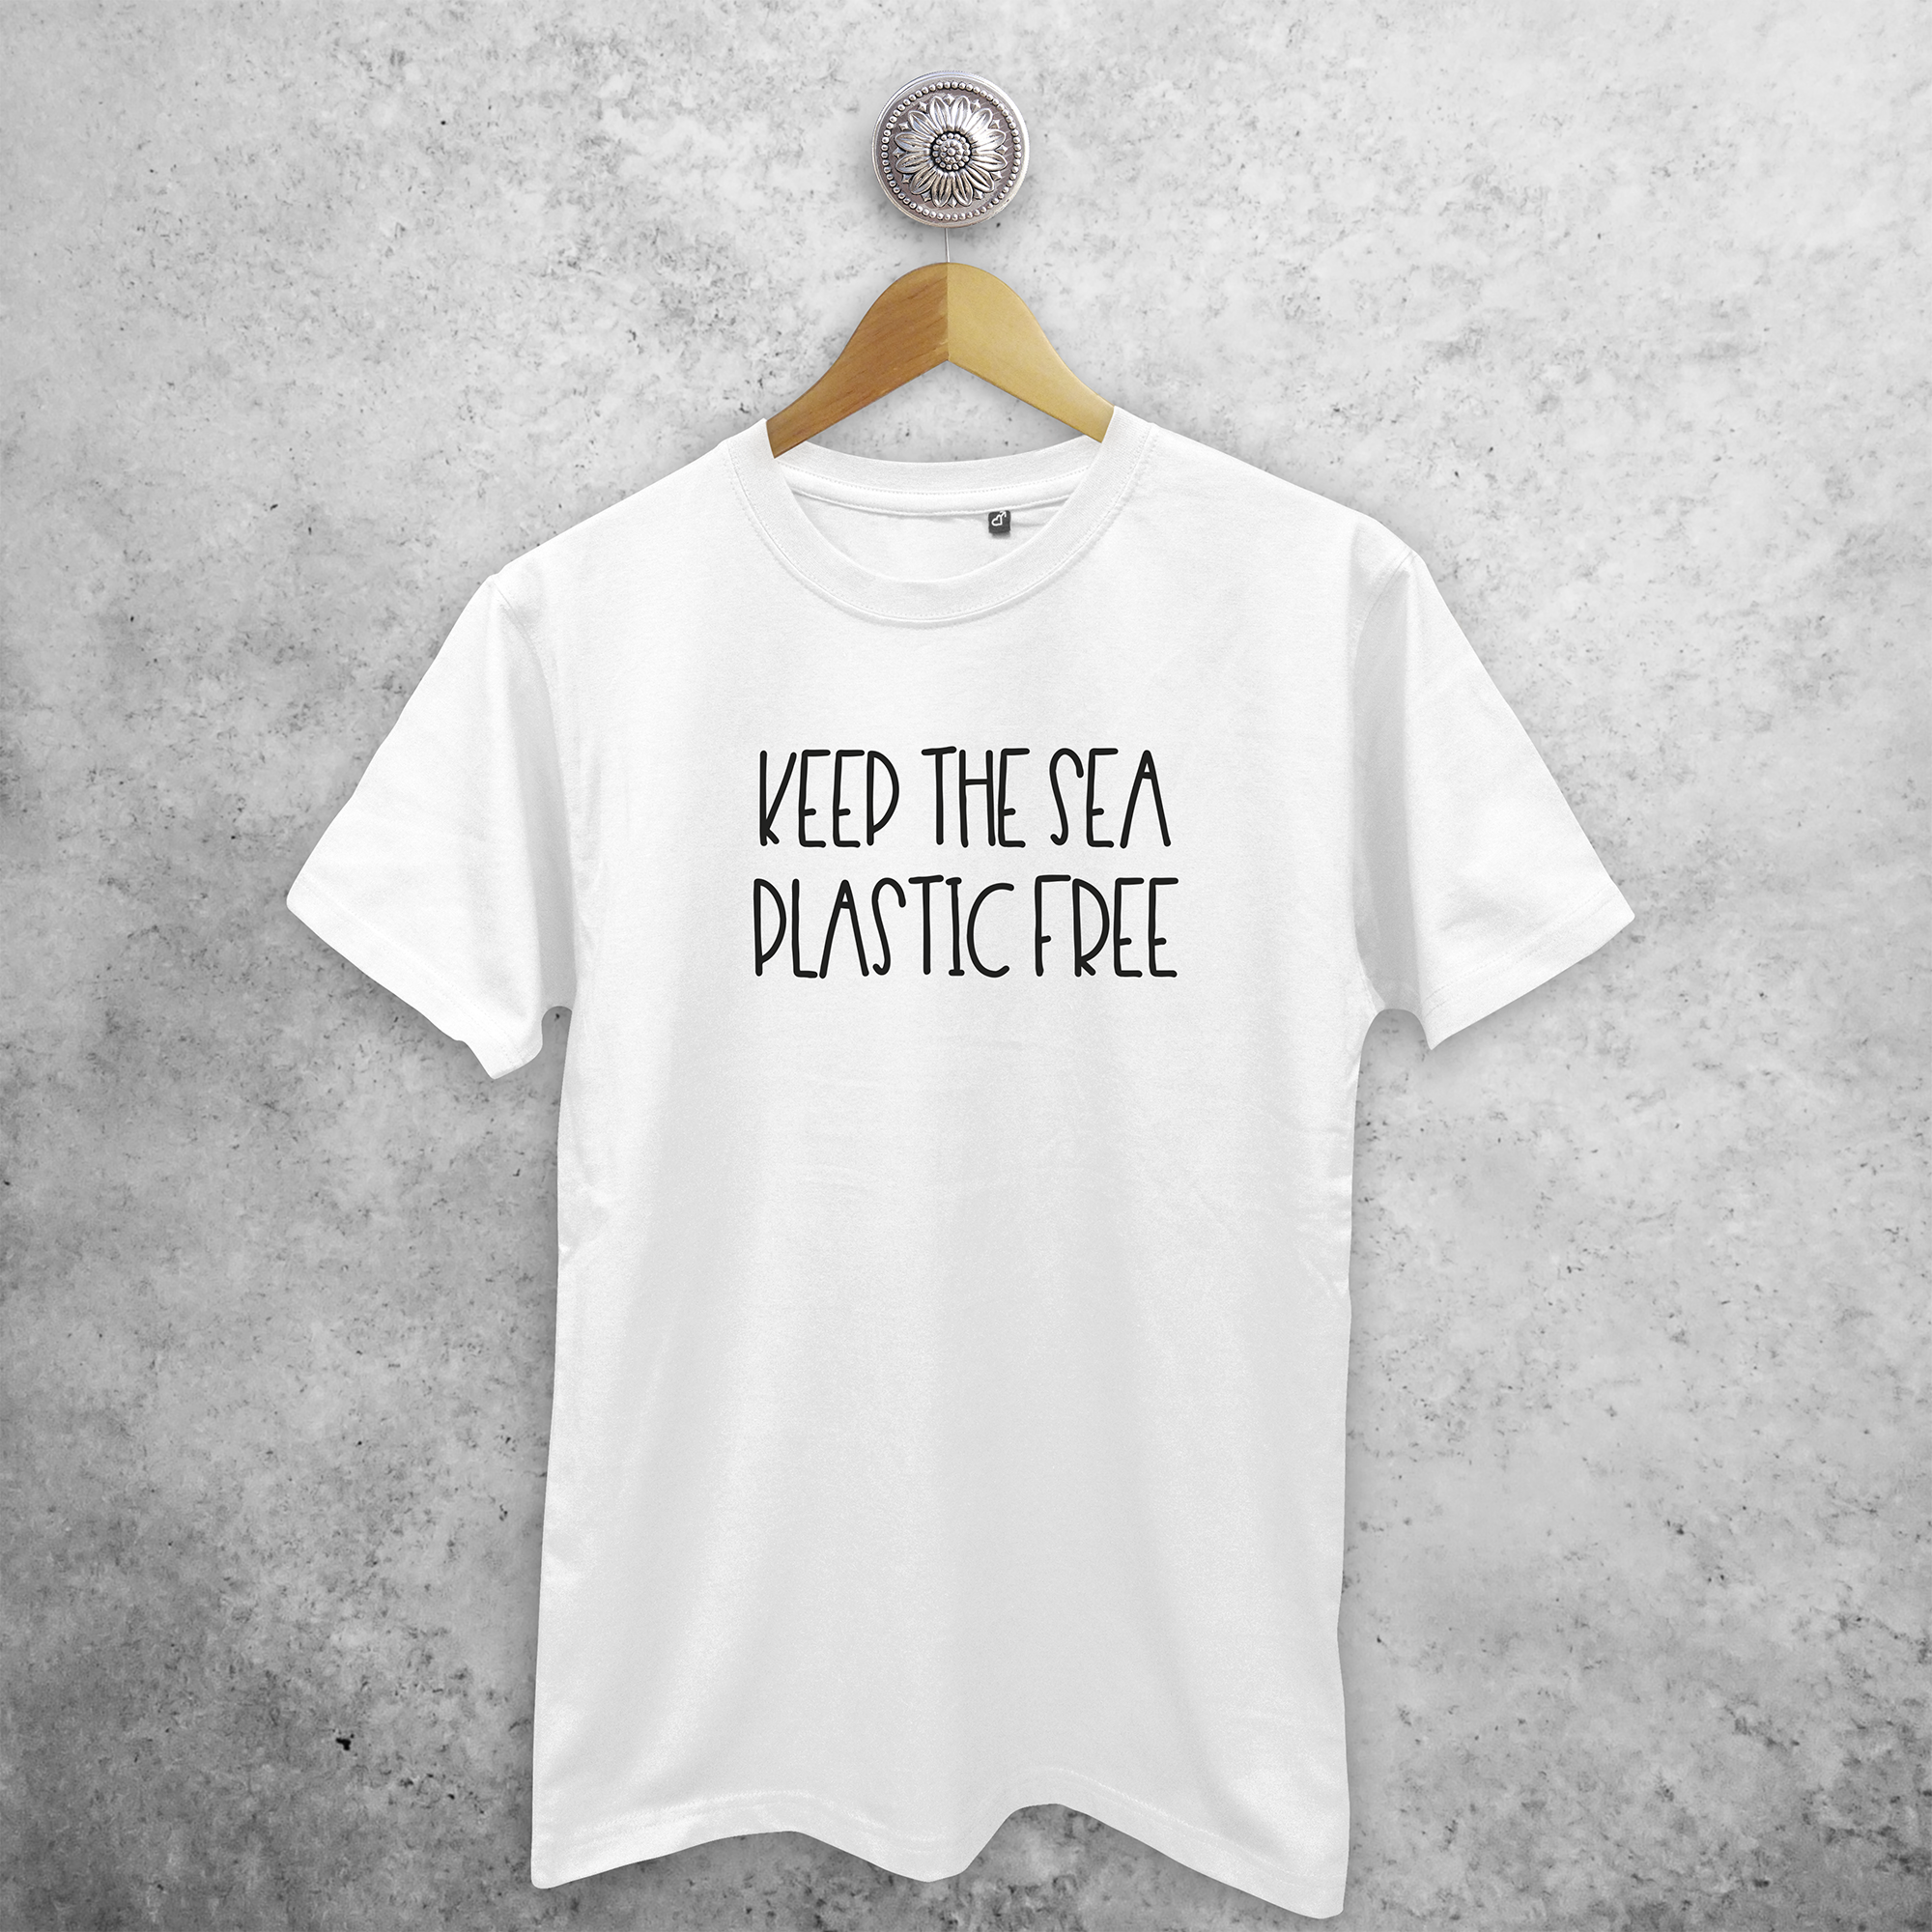 'Keep the sea plastic free' volwassene shirt